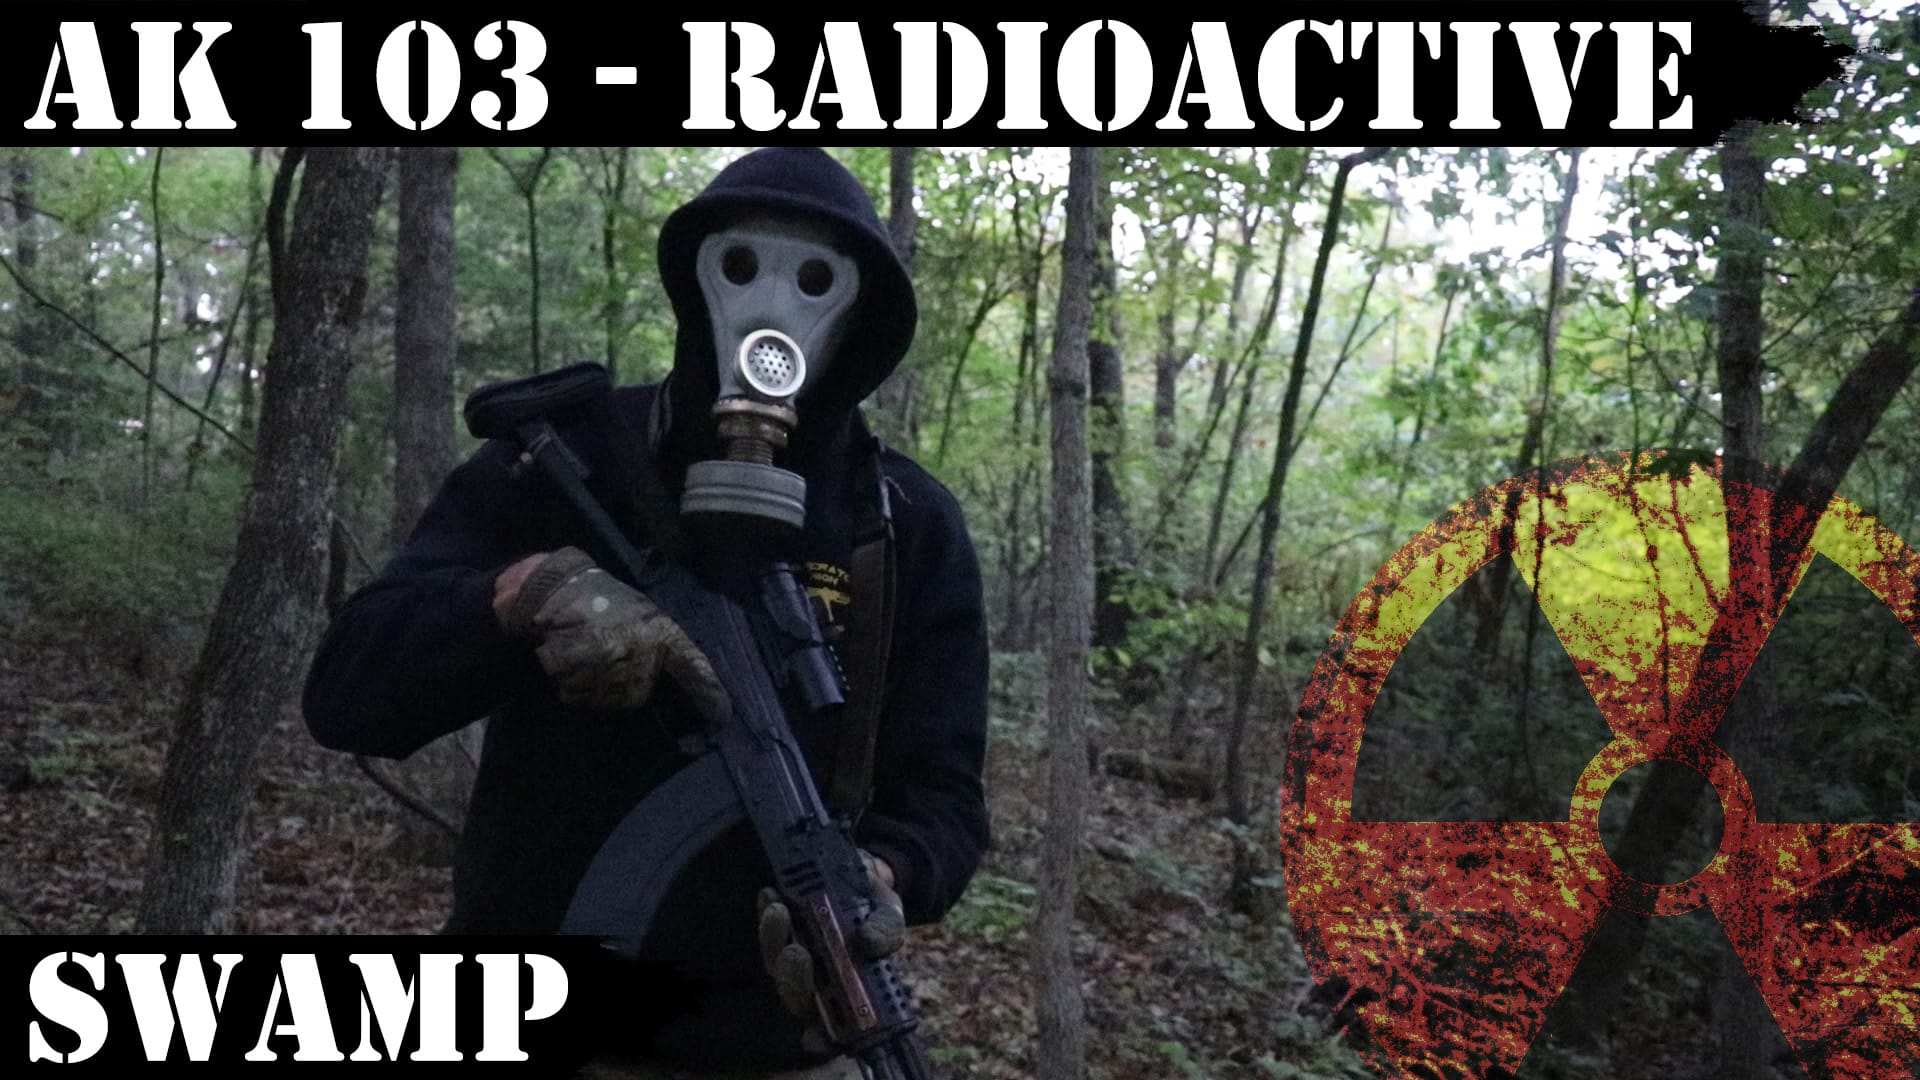 PSA AK103 2k RDS Radioactive!